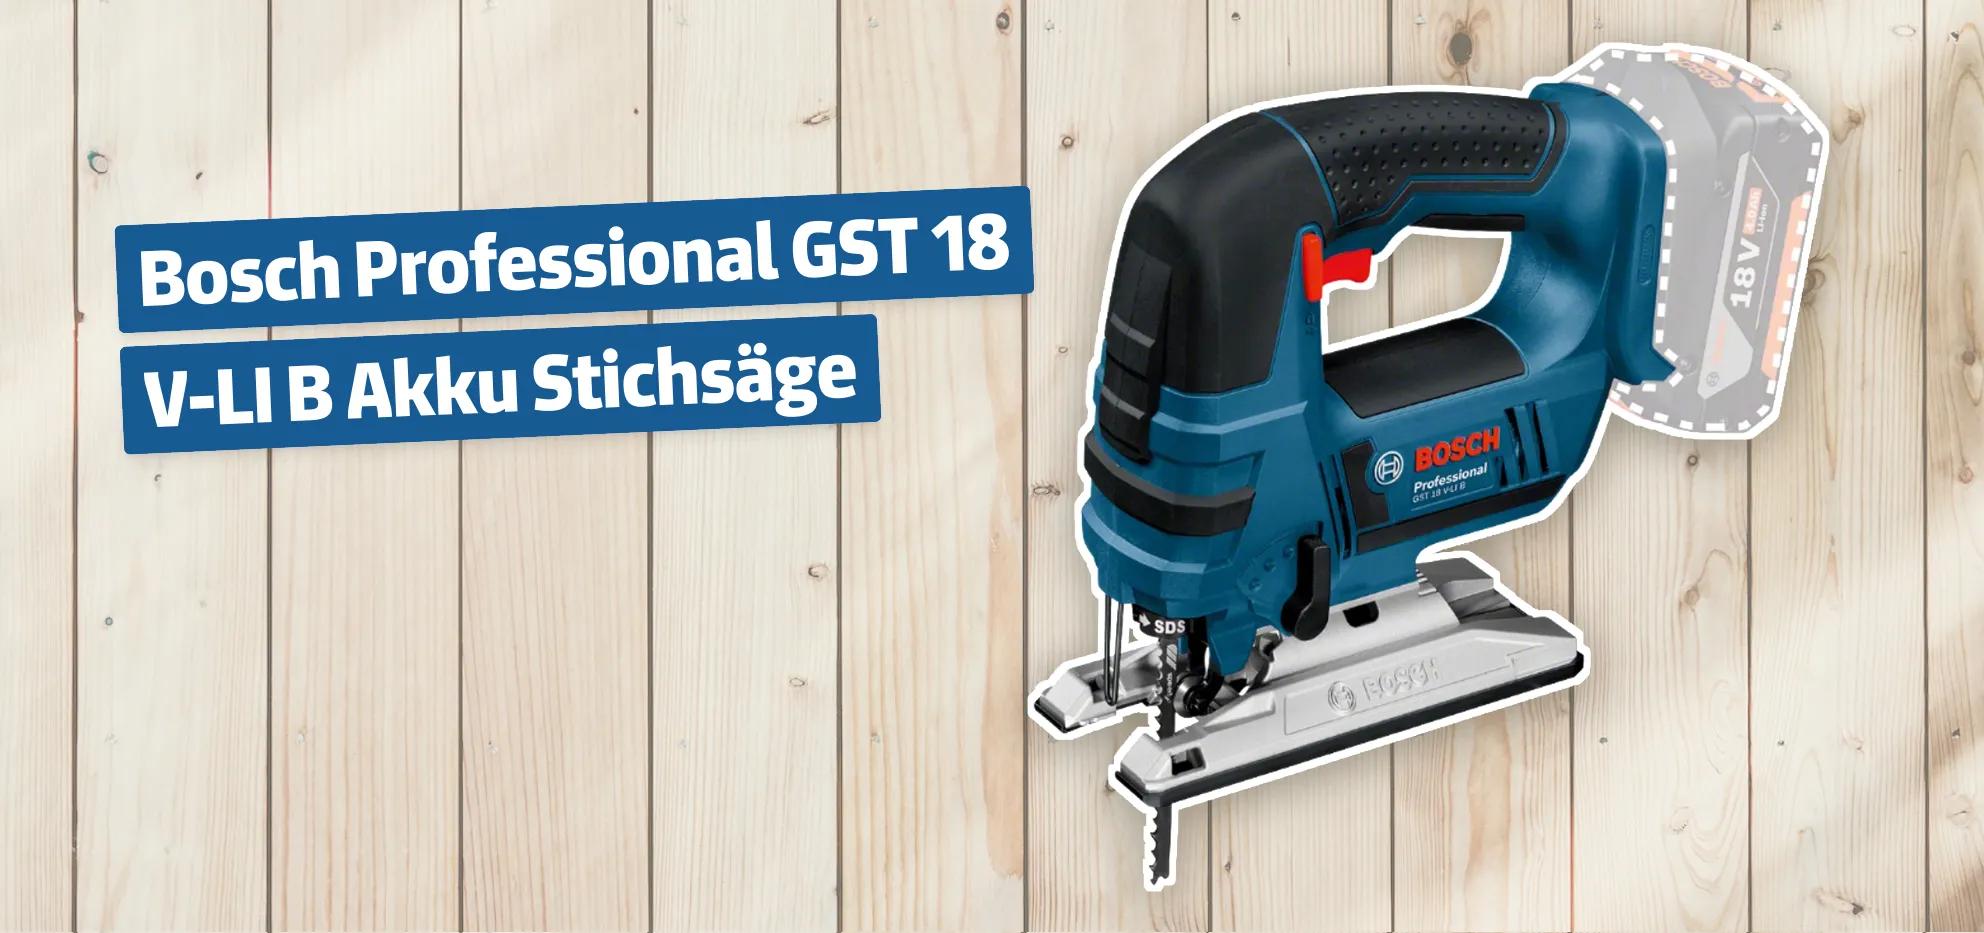 Bosch Professional GST 18 V-LI B Akku Stichsäge